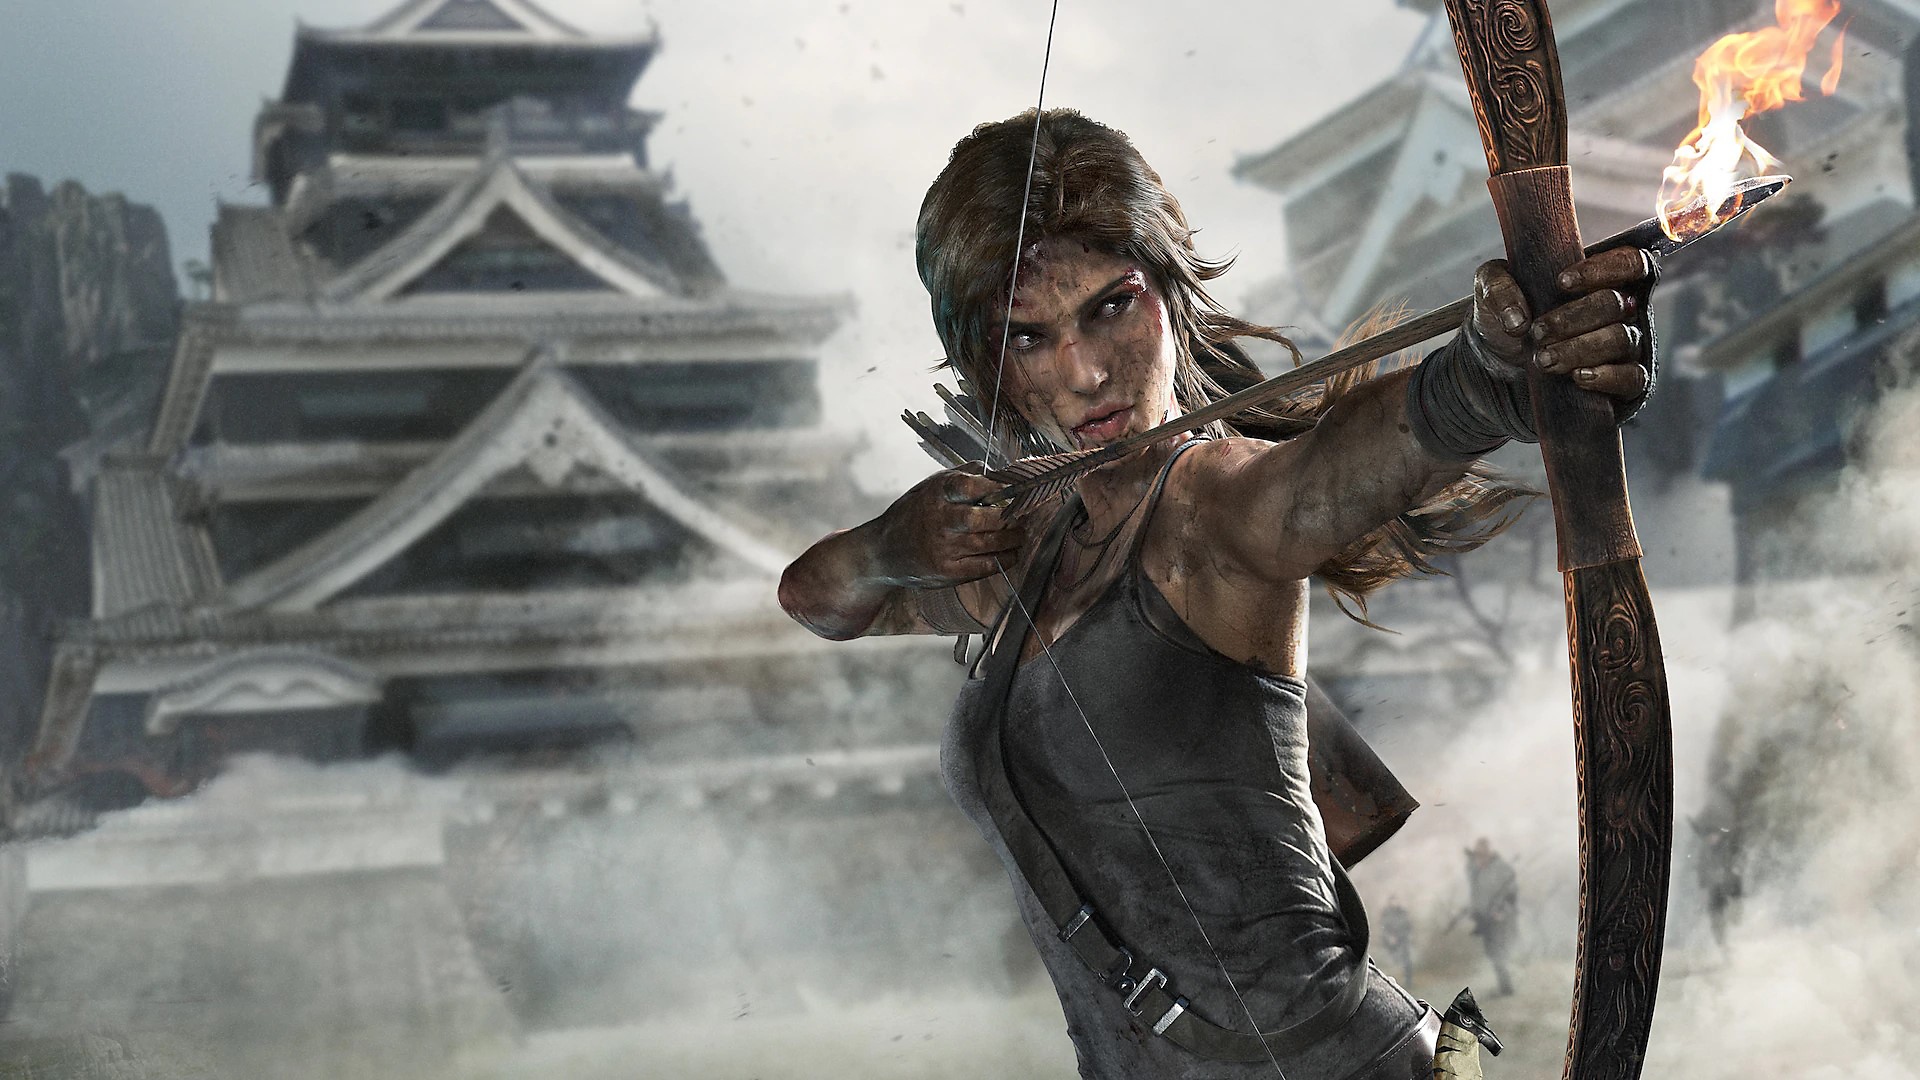 Illustration de Tomb Raider: Definitive Edition - Lara Croft bandant son arc